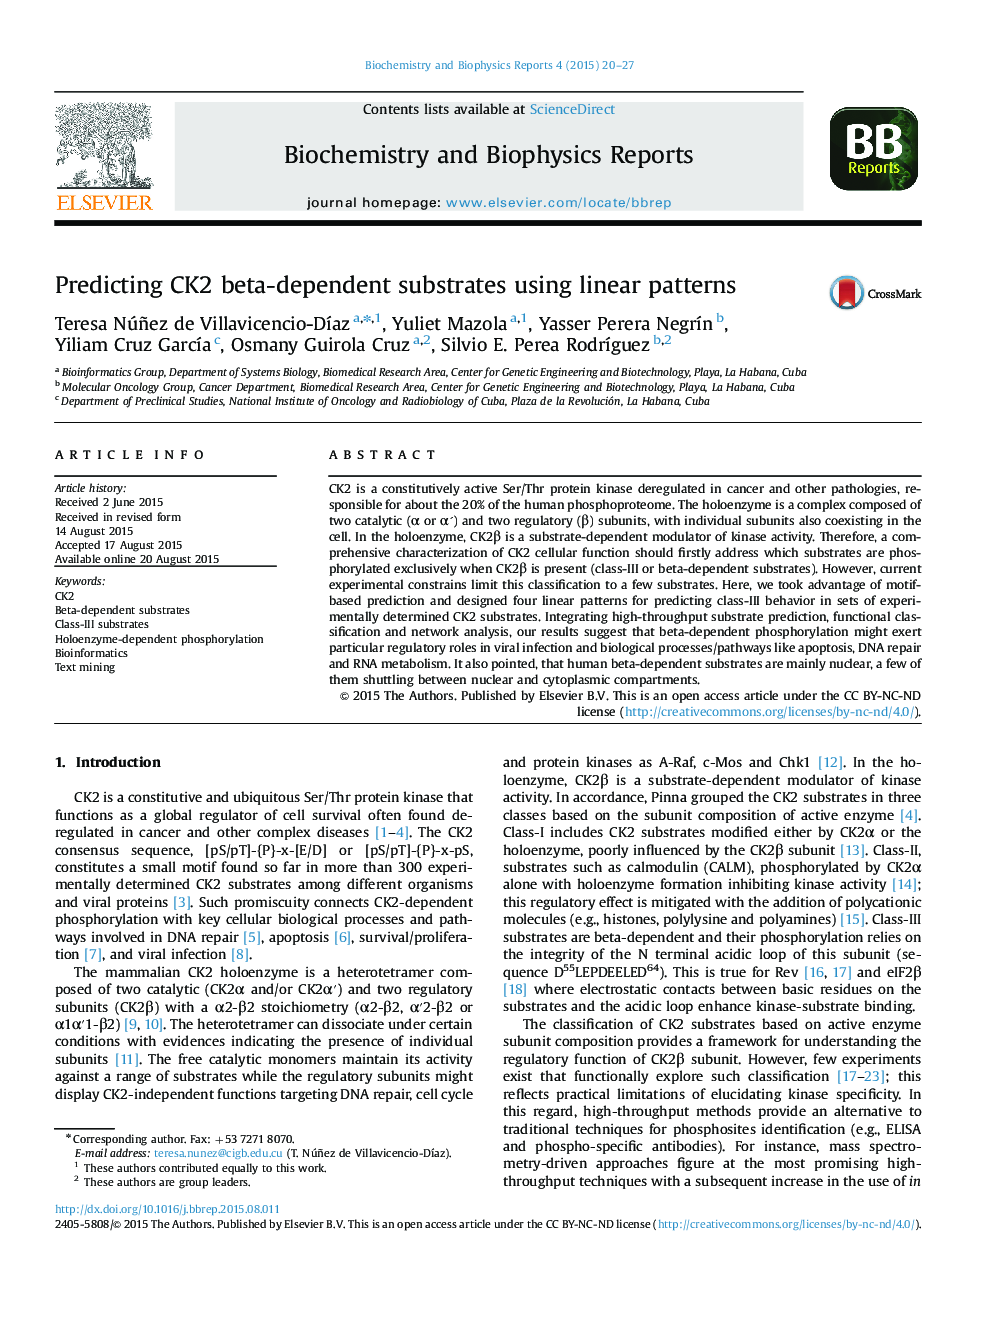 Predicting CK2 beta-dependent substrates using linear patterns